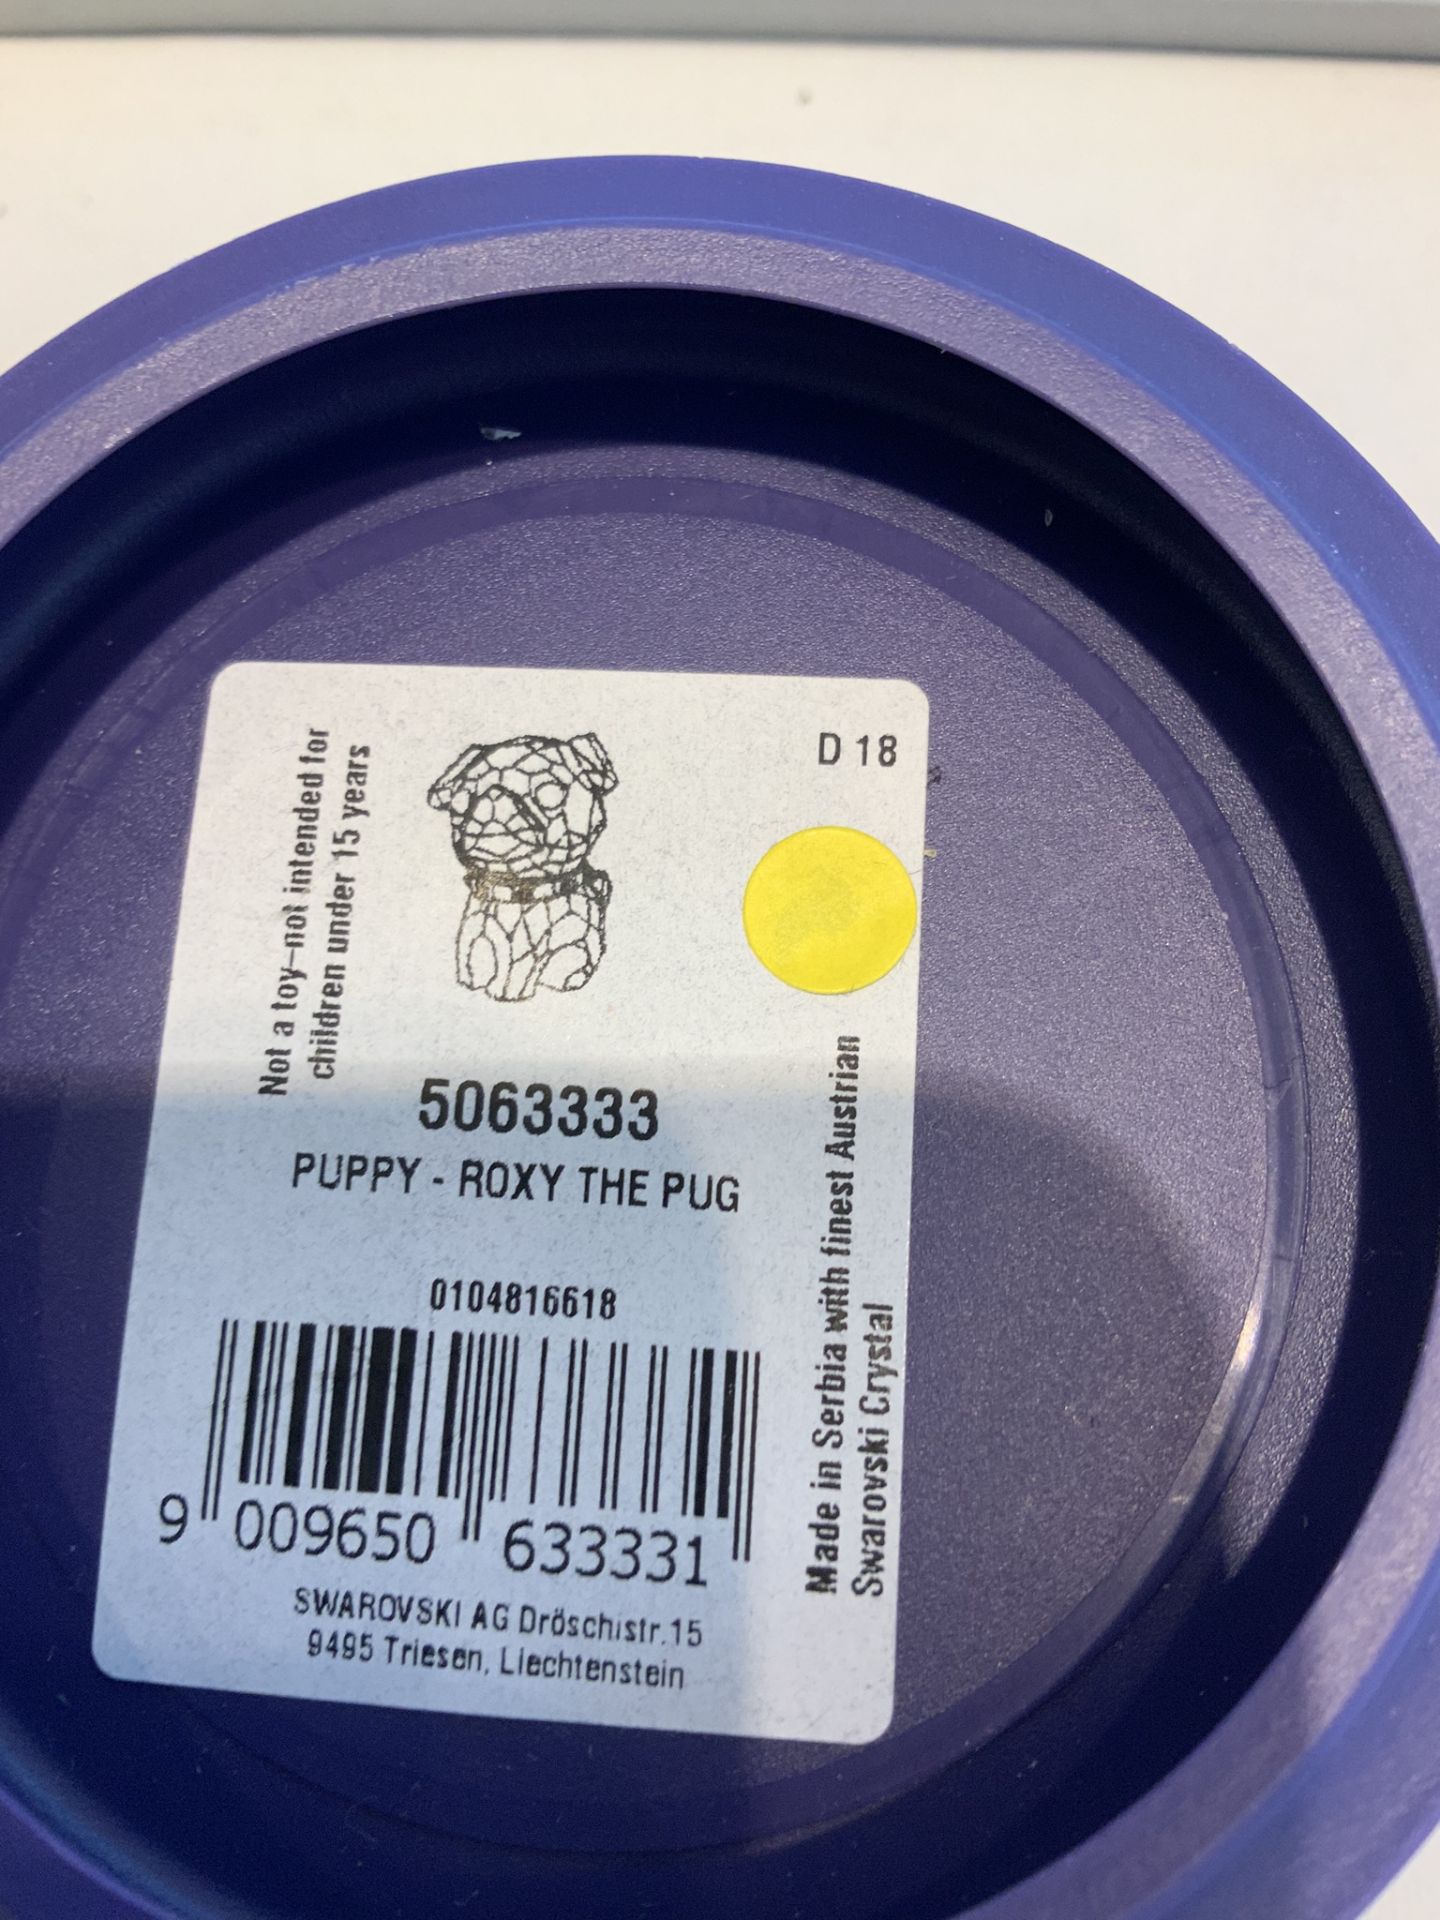 Swarovski Crystal Puppy - Roxy the Pug Figurine RRP £49 - Image 3 of 4